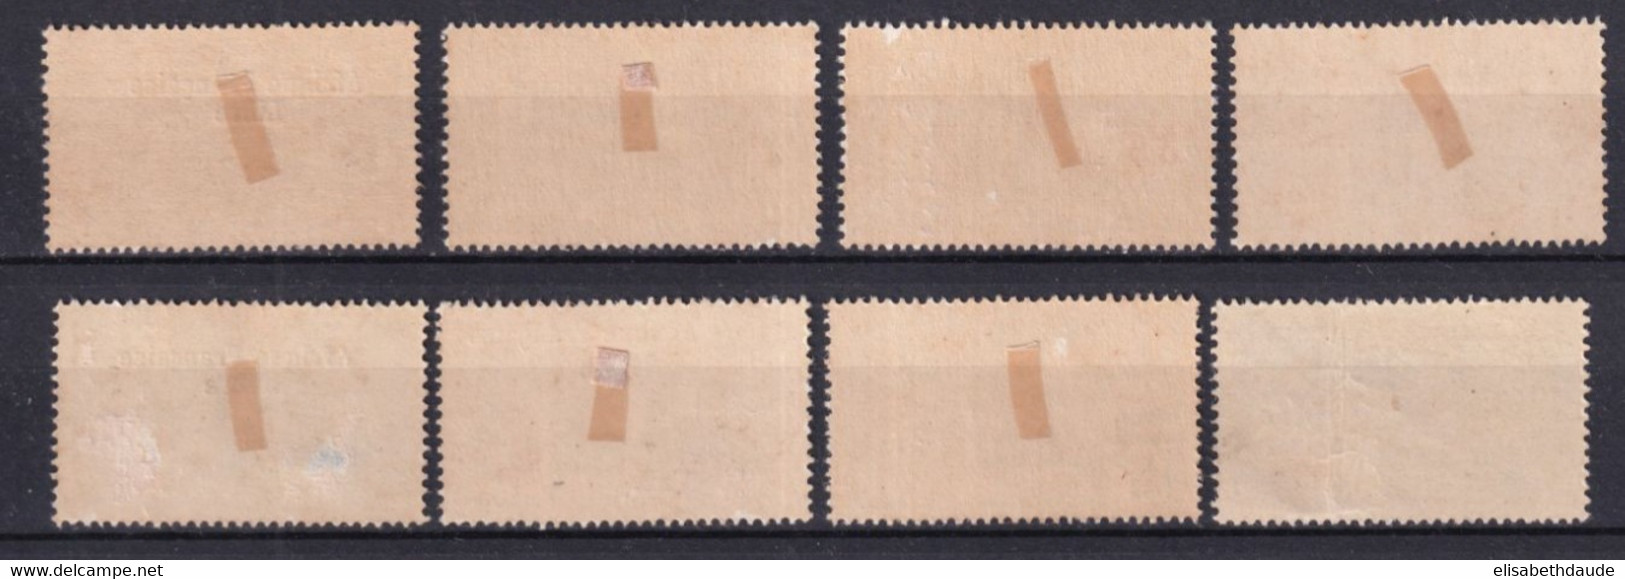 AEF - FRANCE LIBRE - 1940 - POSTE AERIENNE YVERT N° 14/21 * MH - COTE = 800 EUR. - Unused Stamps